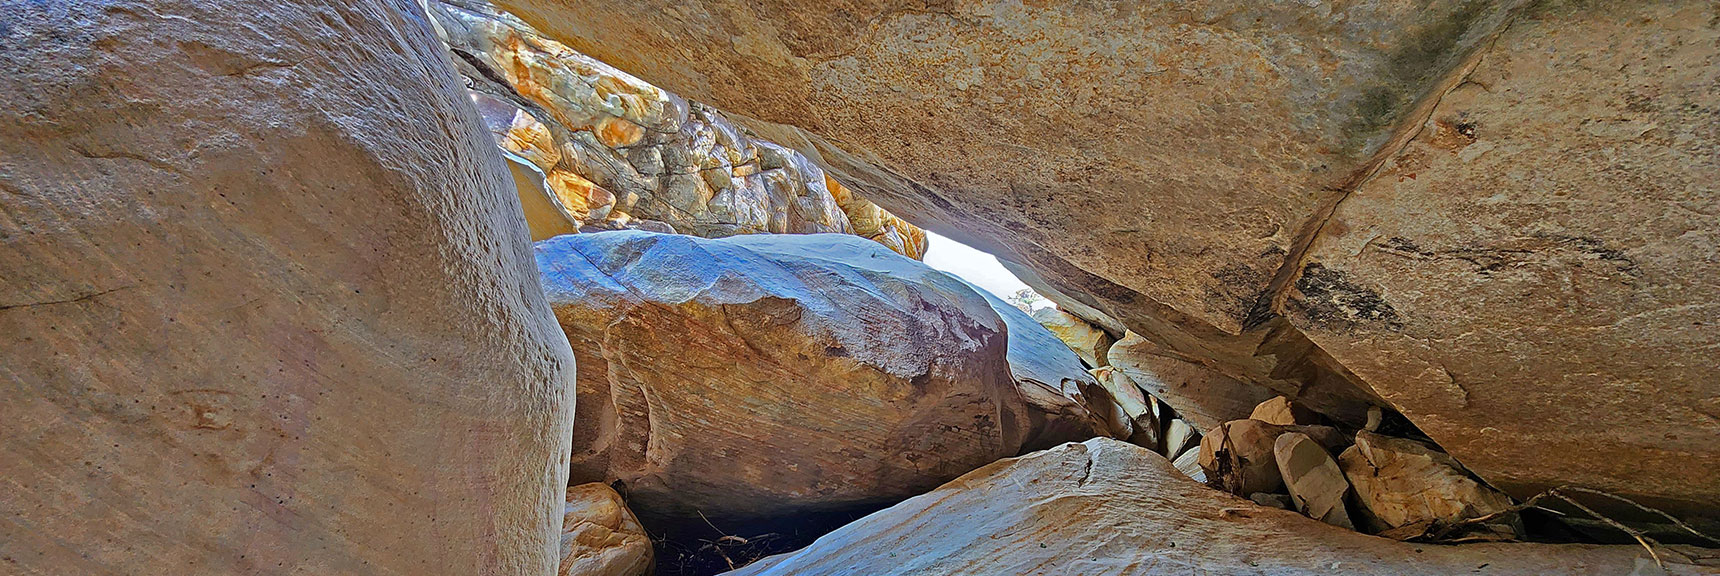 Crawling Beneath Huge Boulders at a Few Points Along the Way | Oak Creek Canyon North Branch Toward Rainbow Mountains Upper Crest Ridgeline | Rainbow Mountain Wilderness, Nevada